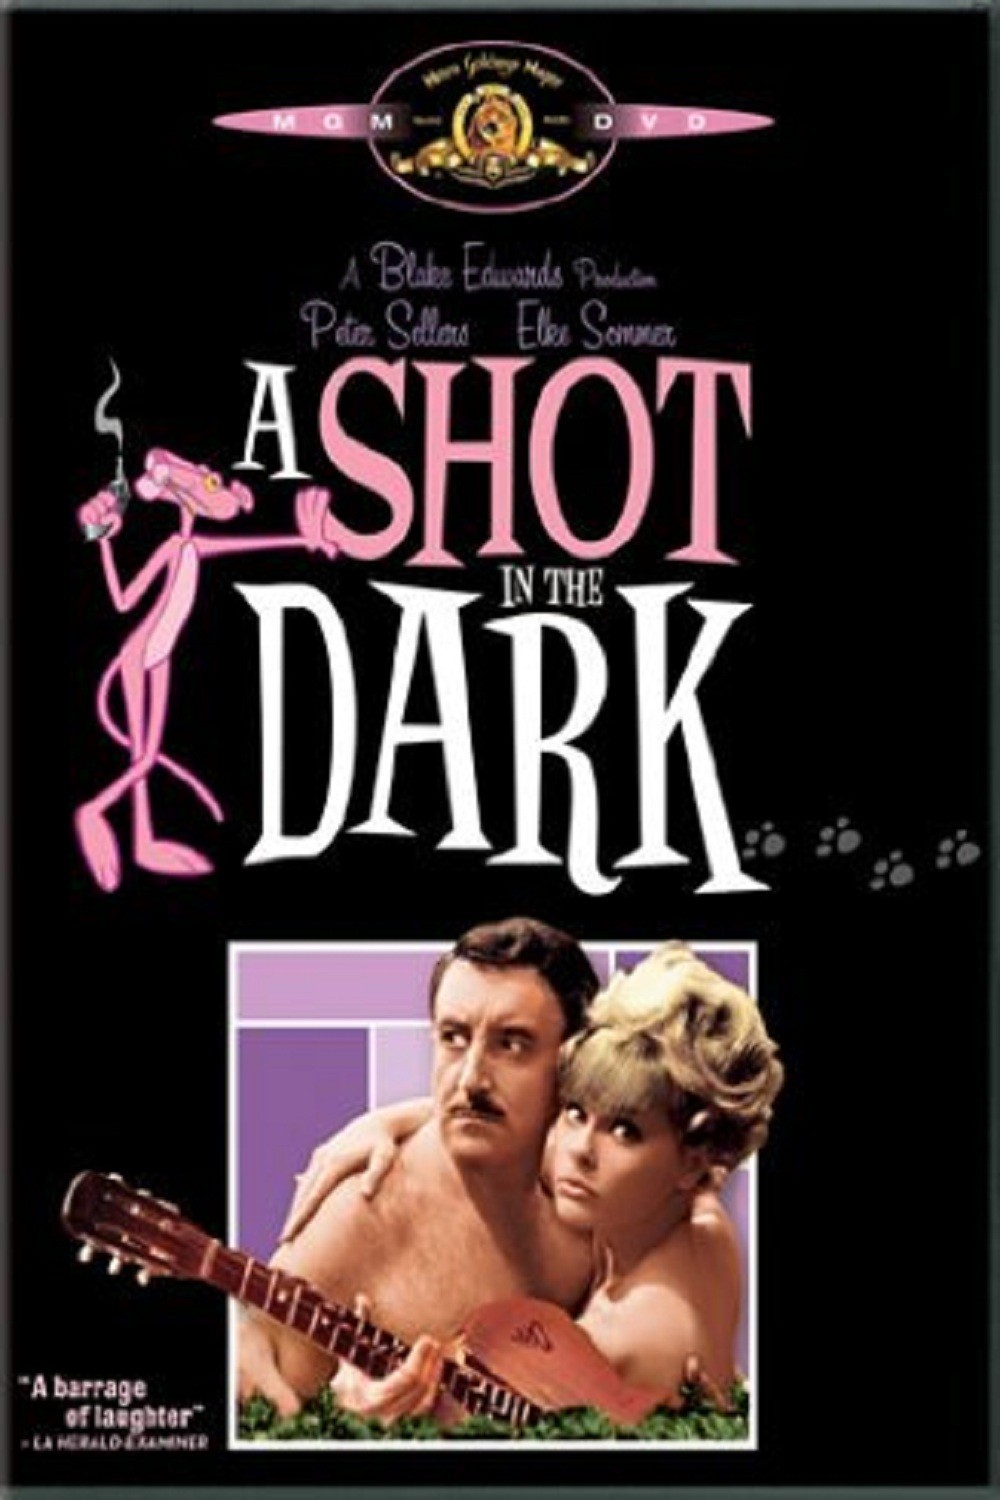 A shot in the dark (1964)